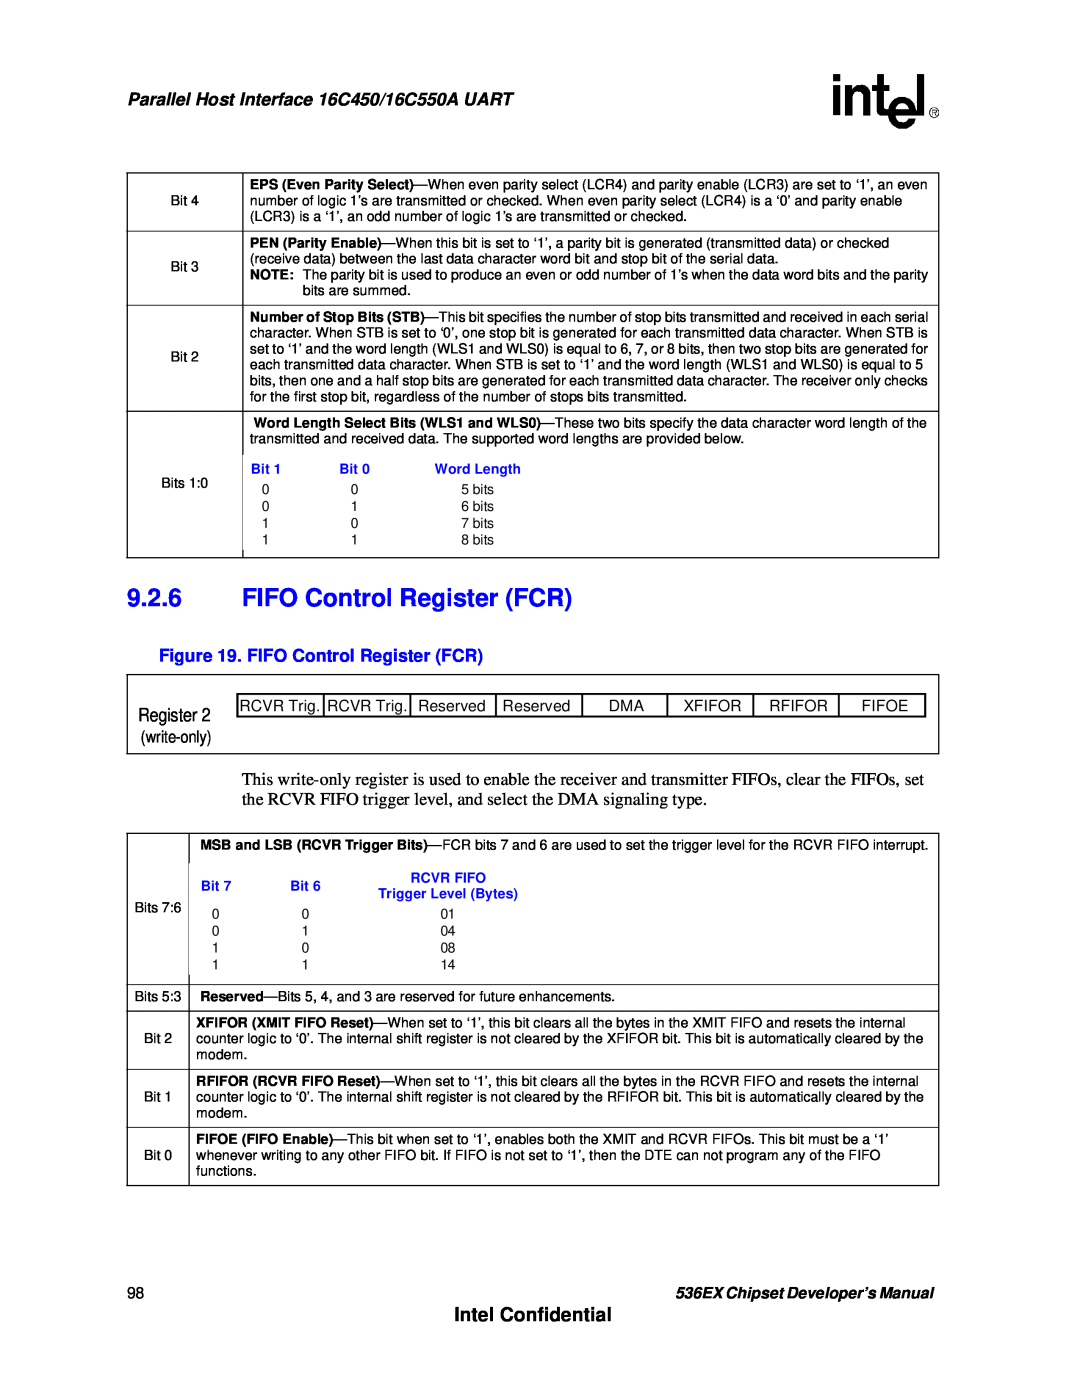 Intel 537EX manual 9.2.6FIFO Control Register FCR, Intel Confidential, Parallel Host Interface 16C450/16C550A UART 